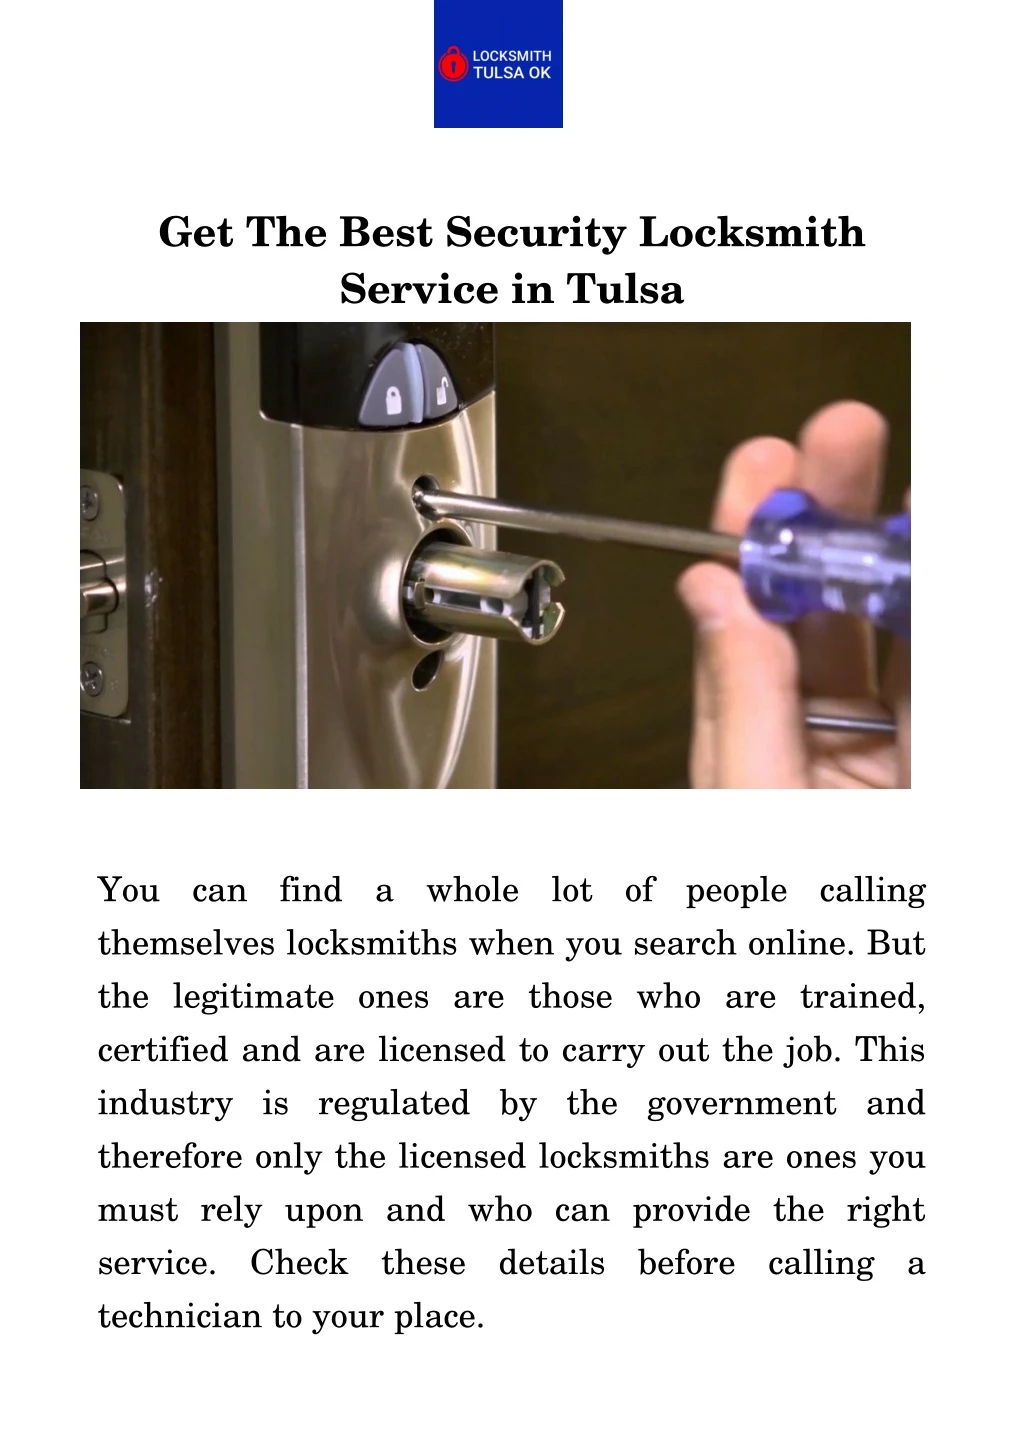 get the best security locksmith service in tulsa